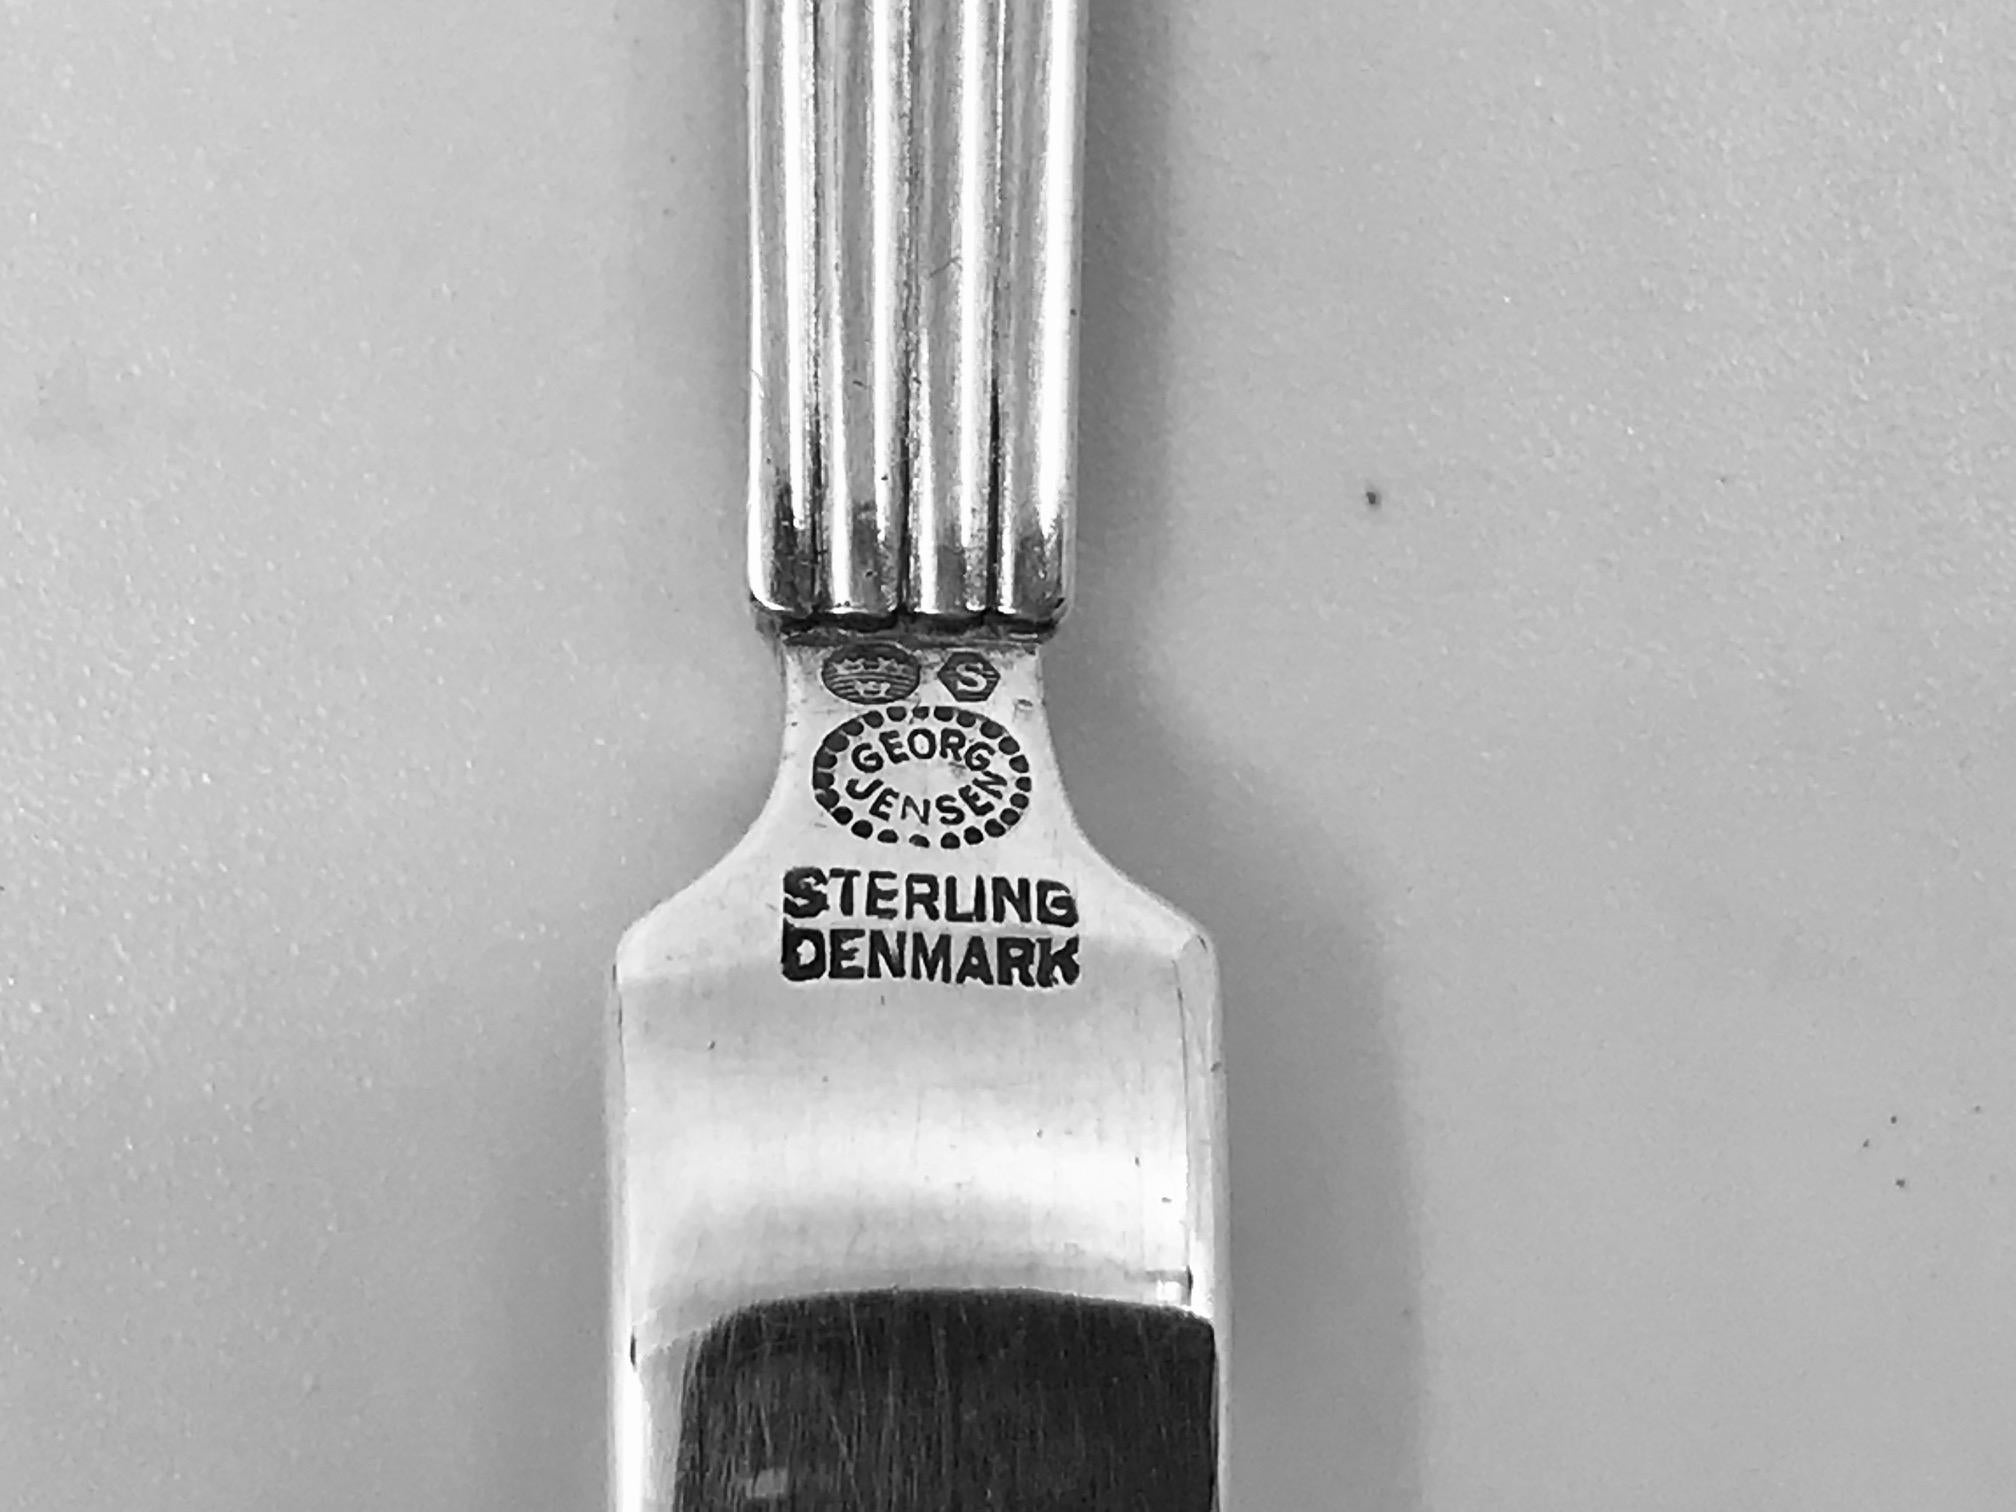 Sterling silver Georg Jensen lemon fork, item 146 in the Bernadotte pattern, design #9 by Sigvard Bernadotte from 1938.

Additional information:
Material: Sterling Silver
Style: Art Deco
Hallmarks: With Georg Jensen hallmark, made in